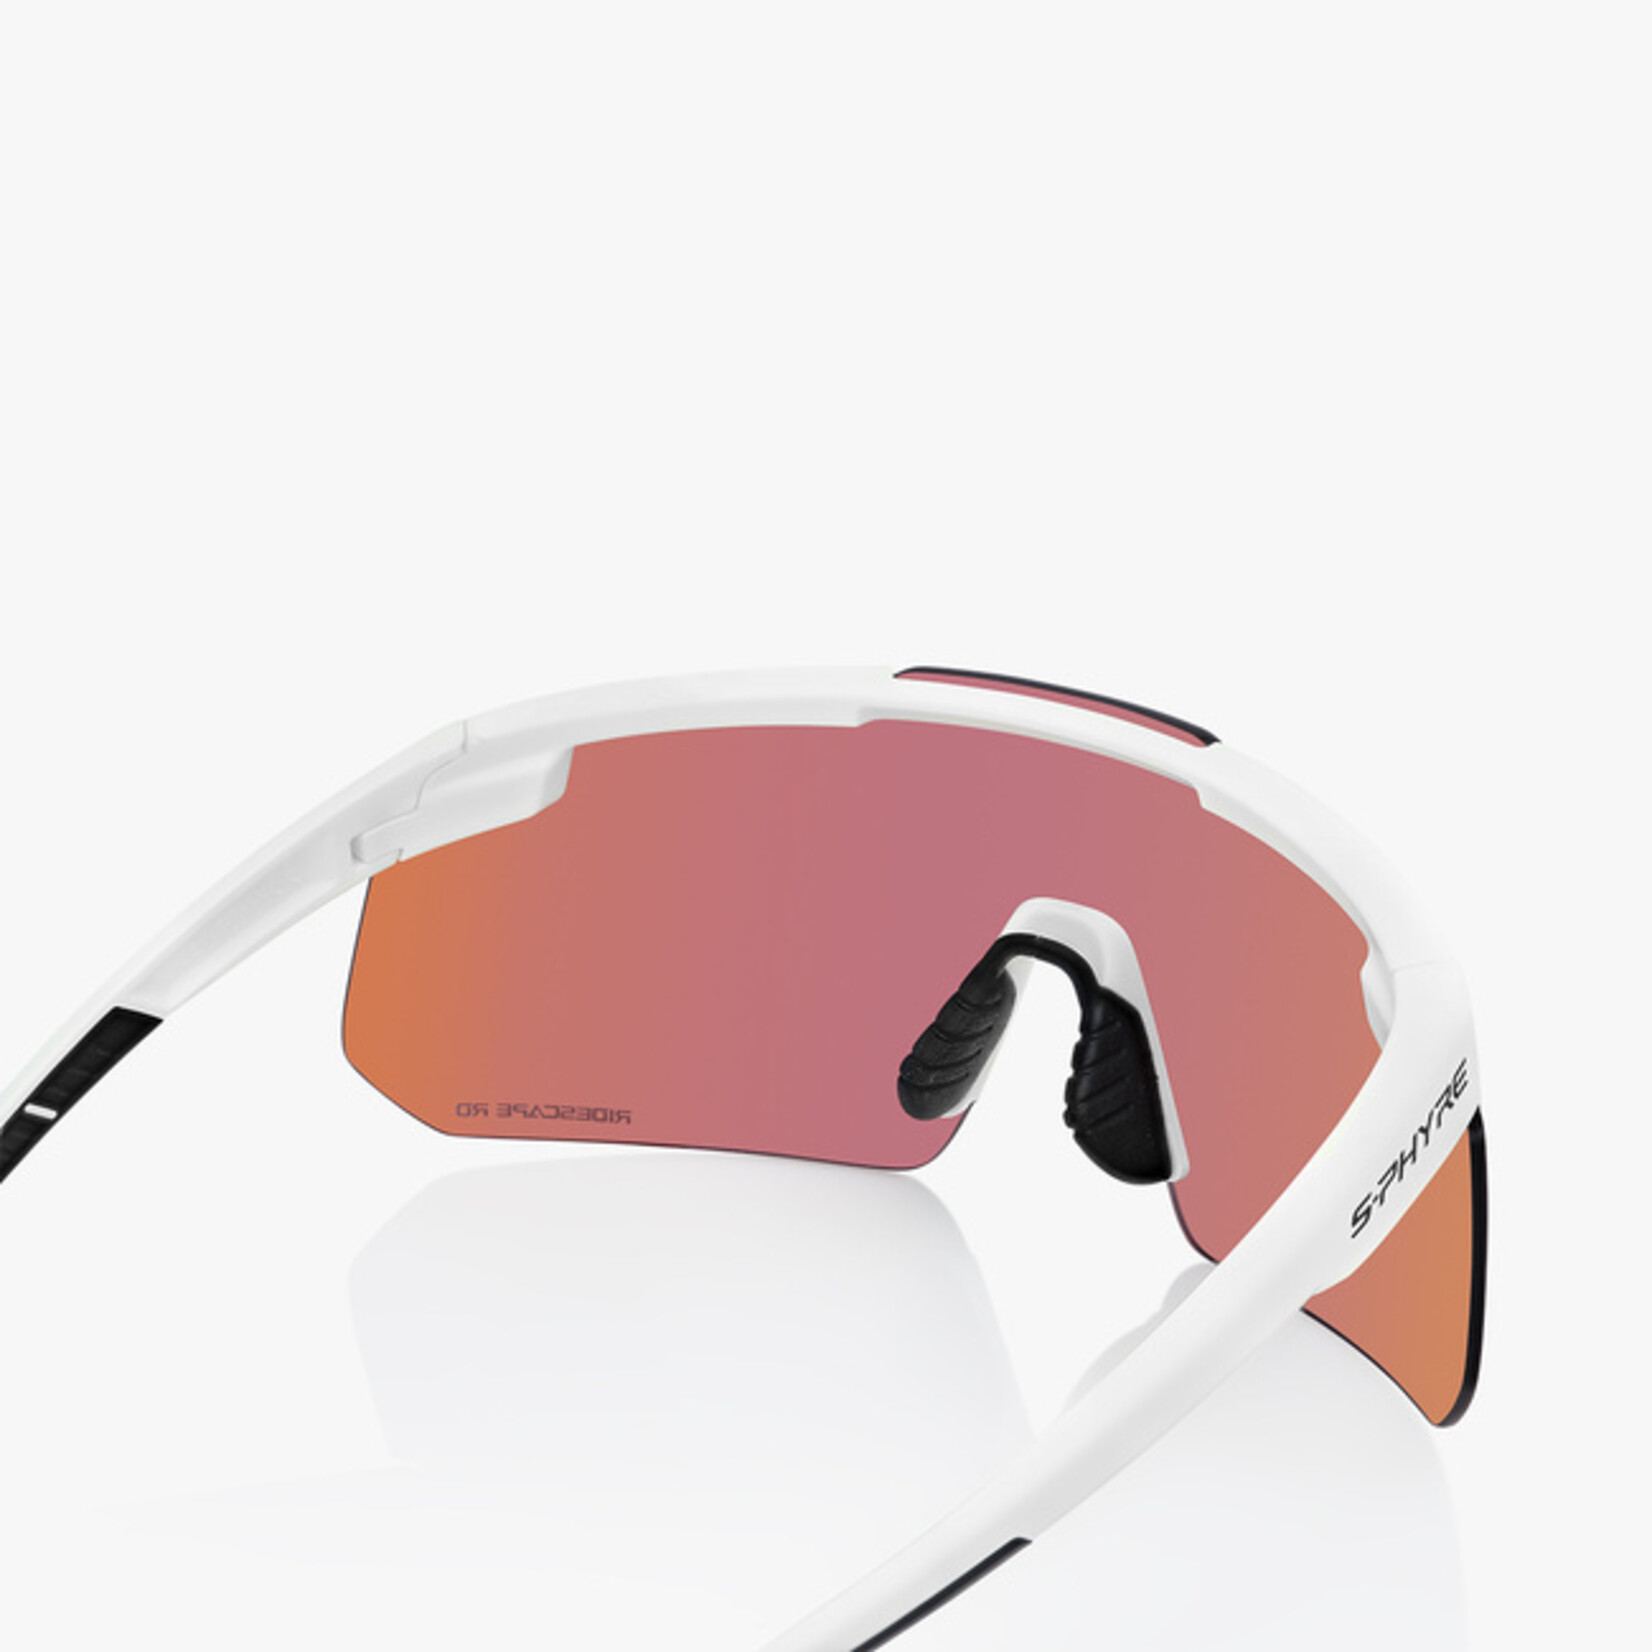 SHIMANO Shimano S-Phyre Magnetic Sunglasses